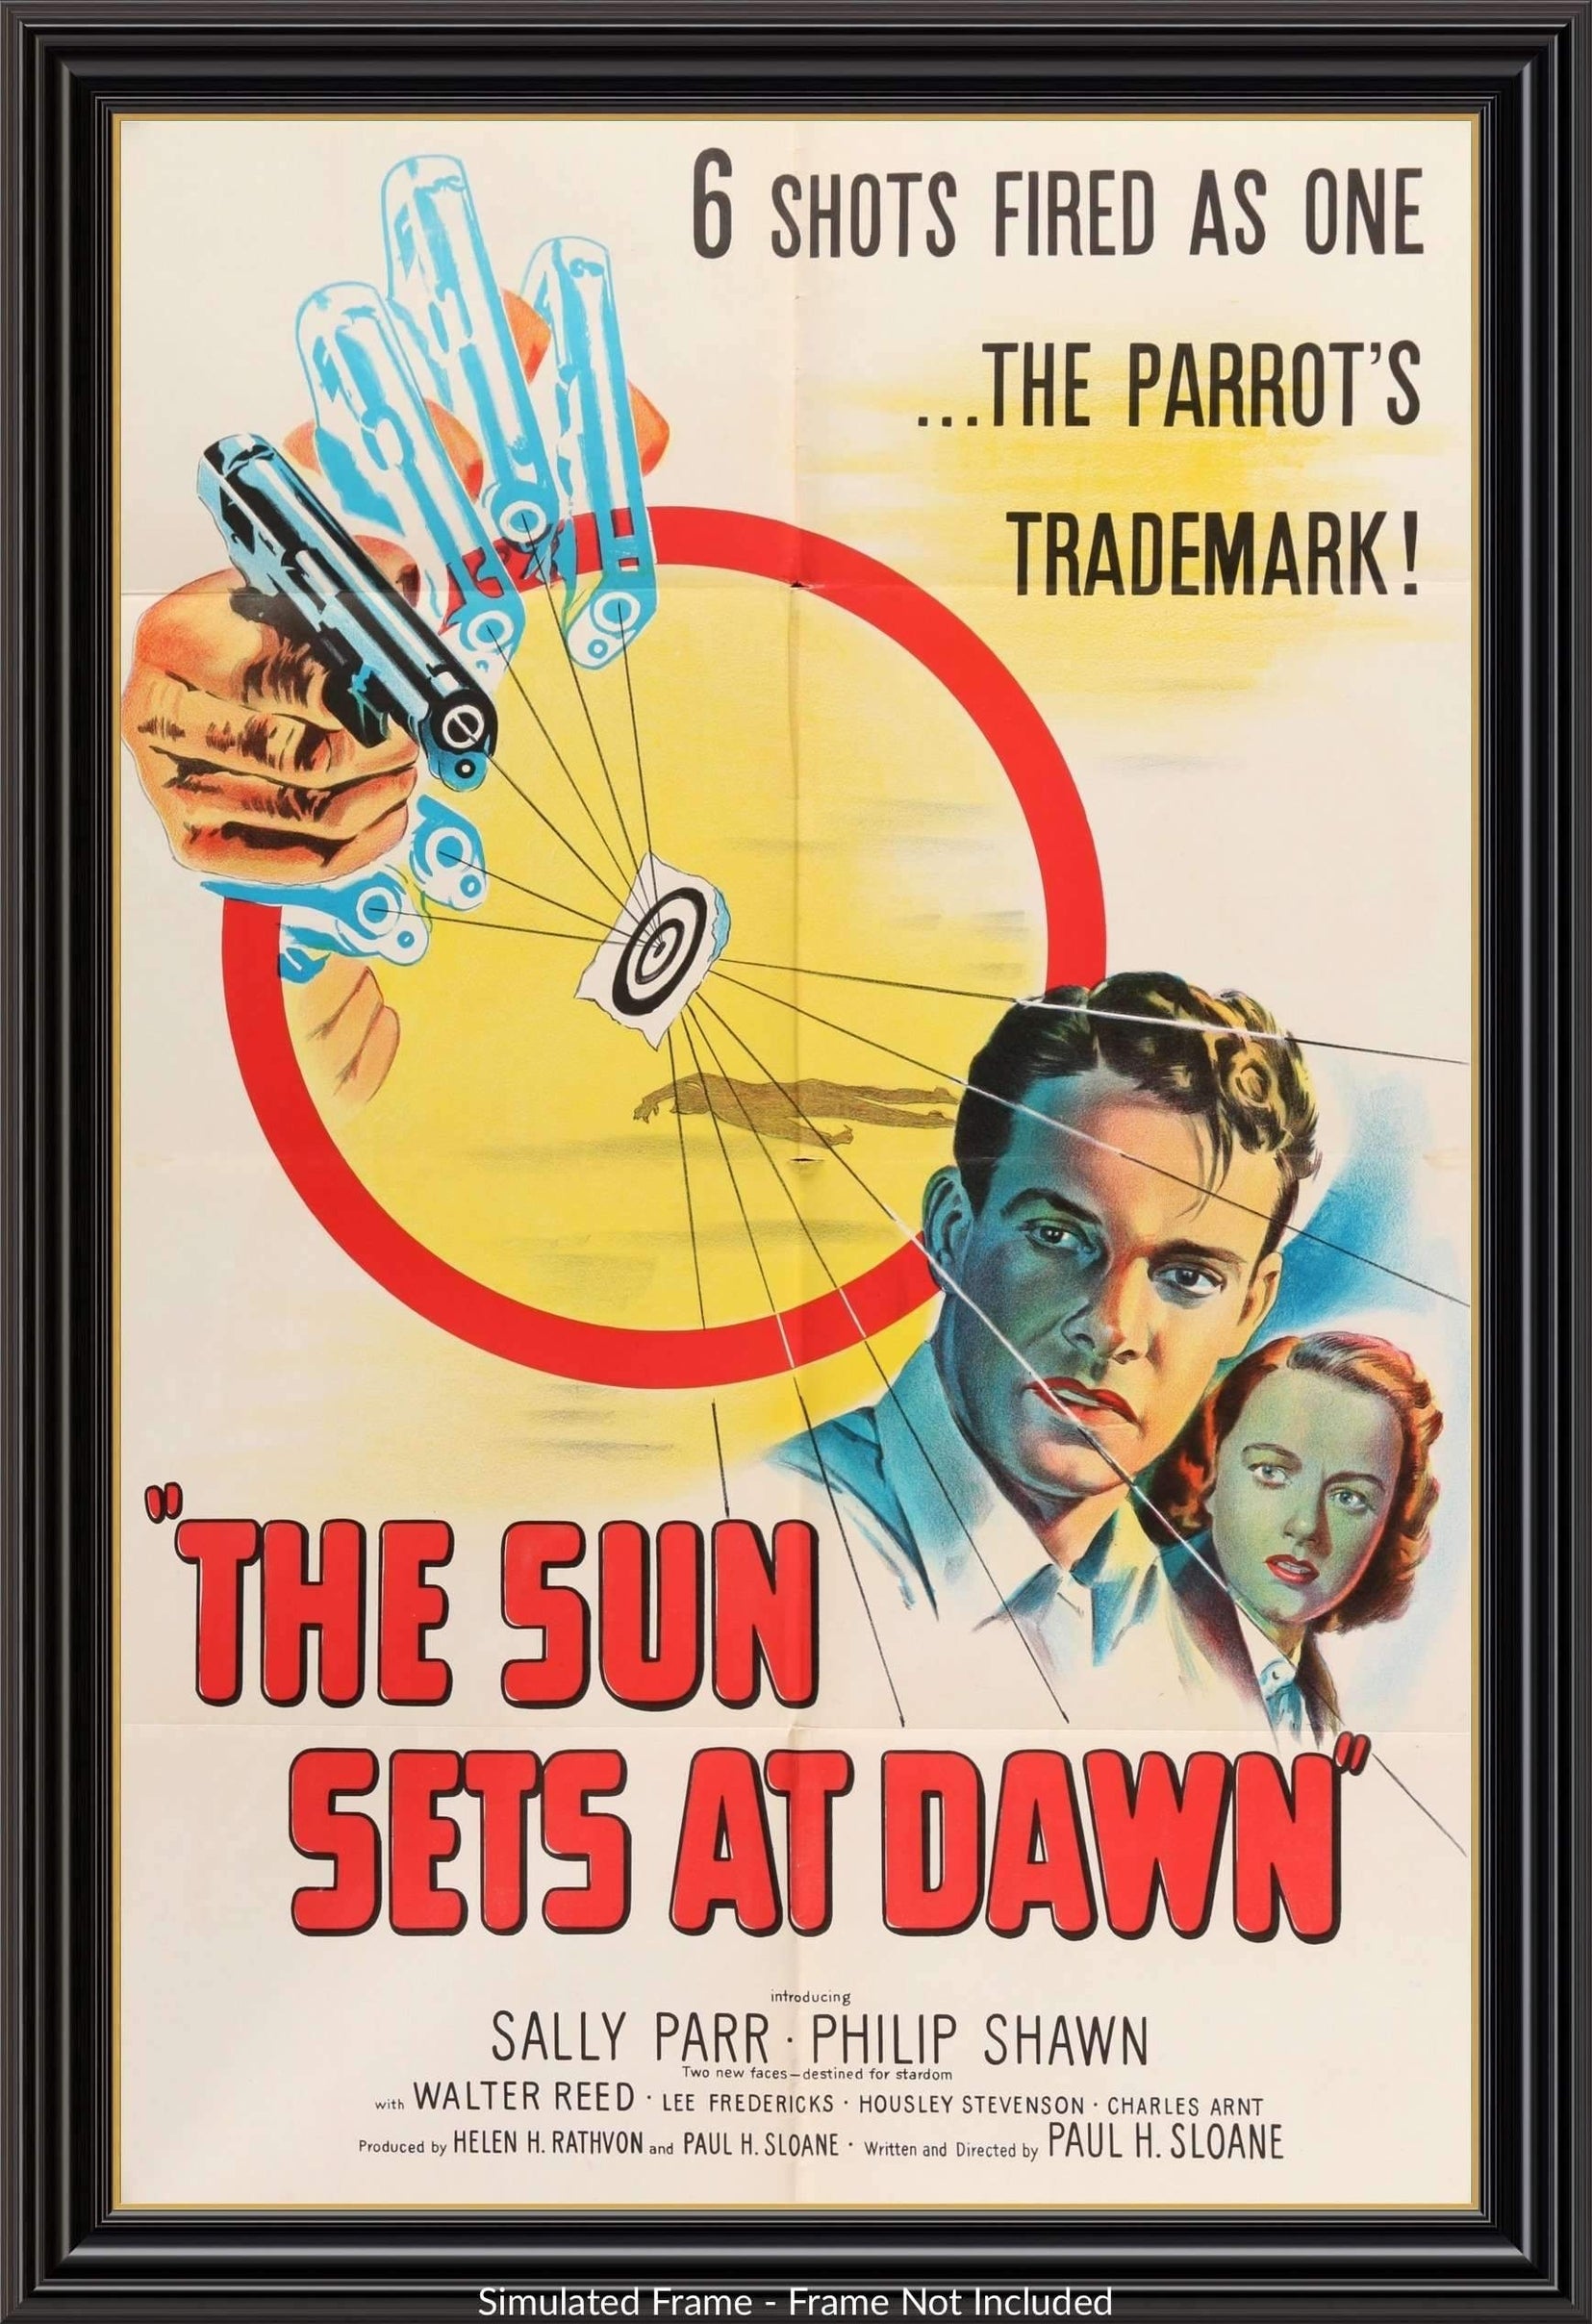 Sun Sets at Dawn (1950) original movie poster for sale at Original Film Art